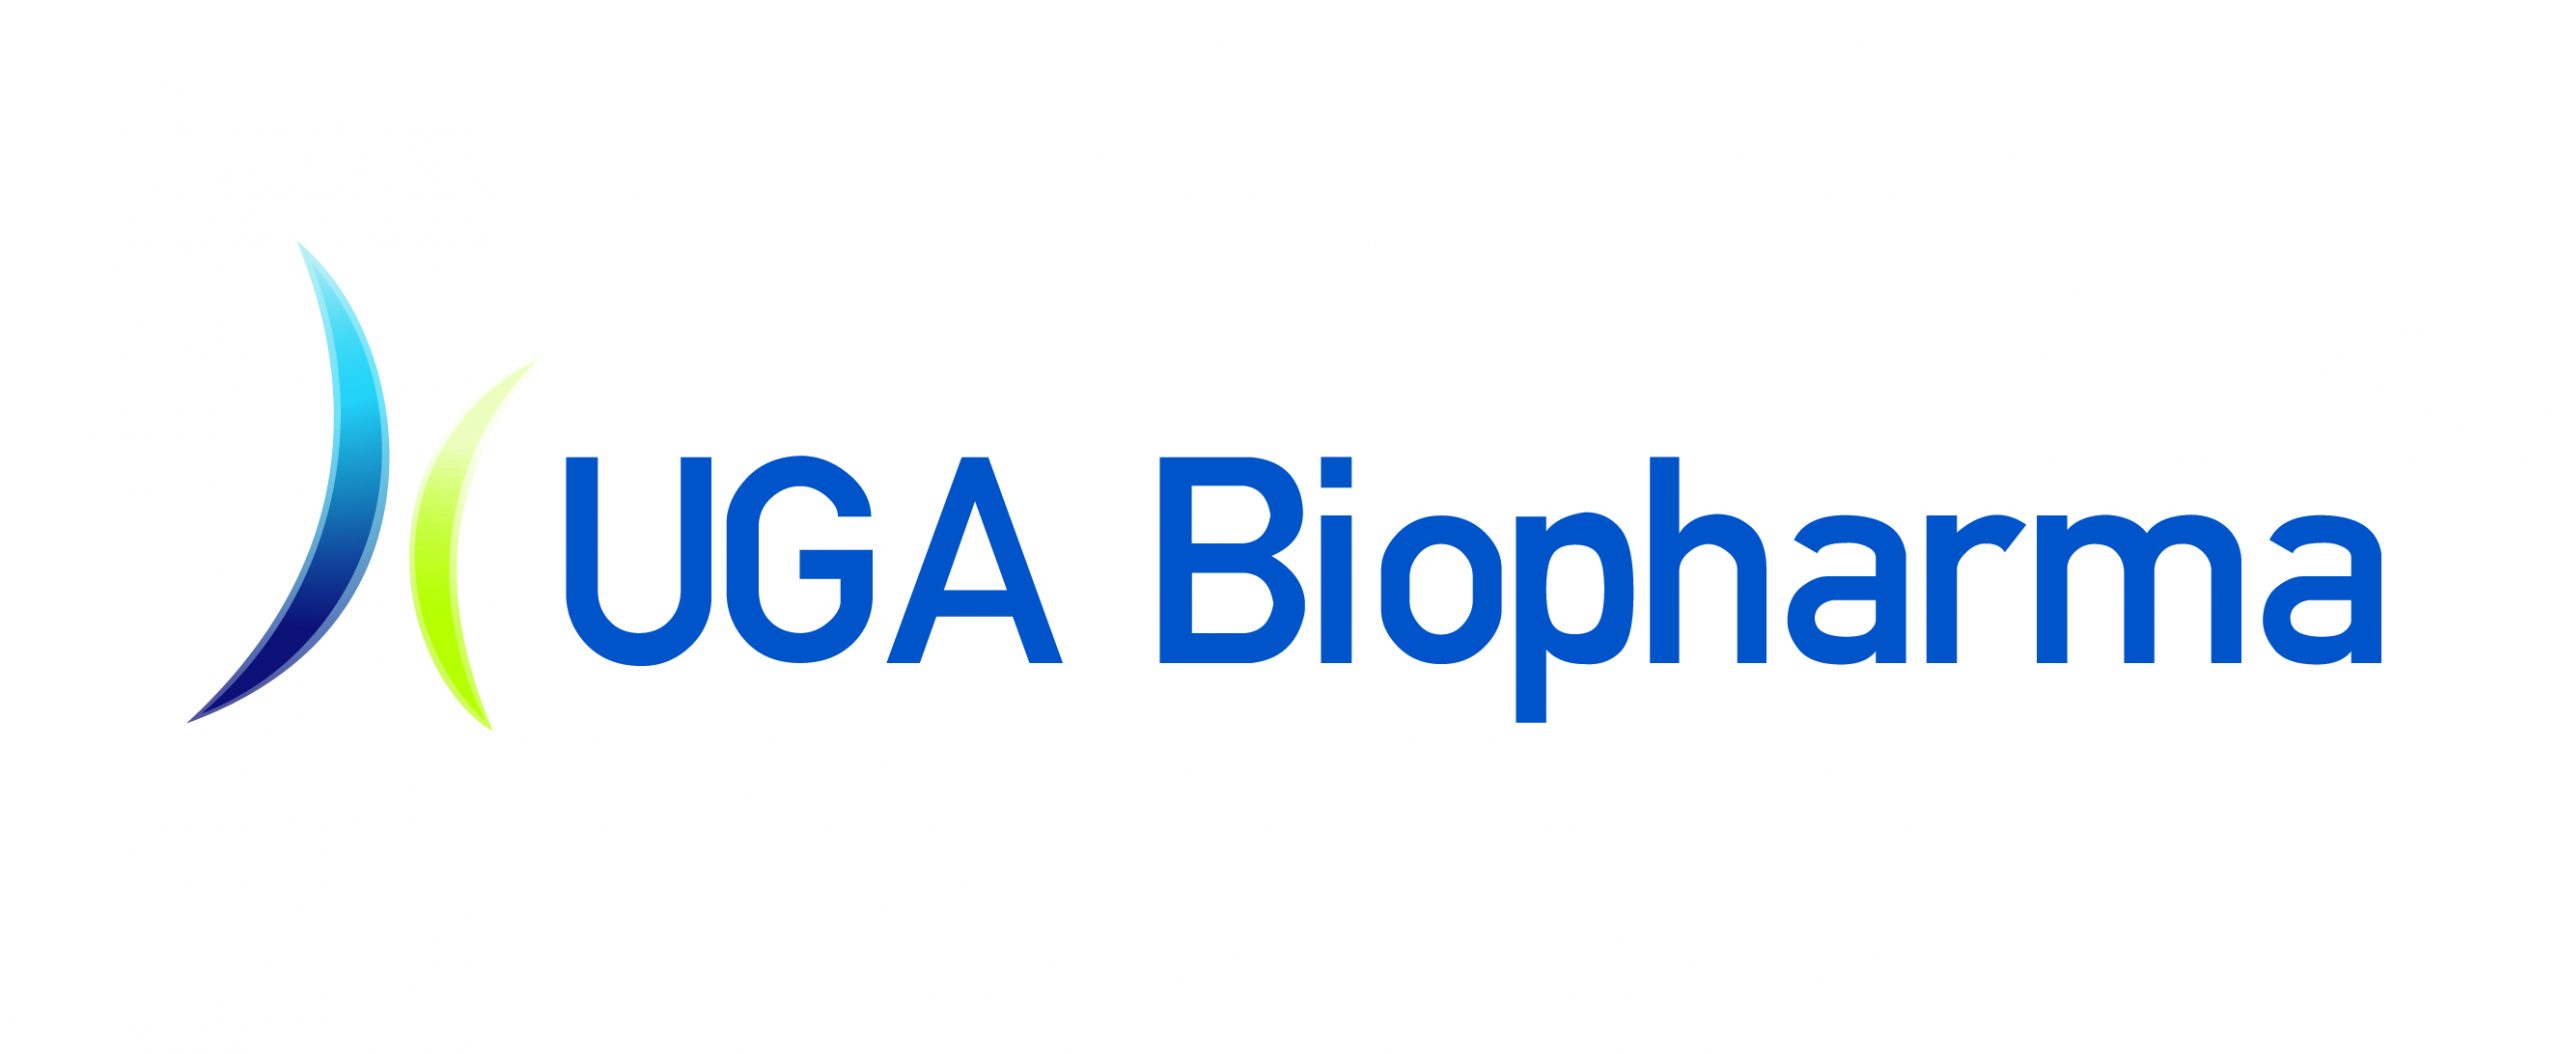 Russian developer Mabscale in-licensed UGA Biopharma´s biosimilar cell lines